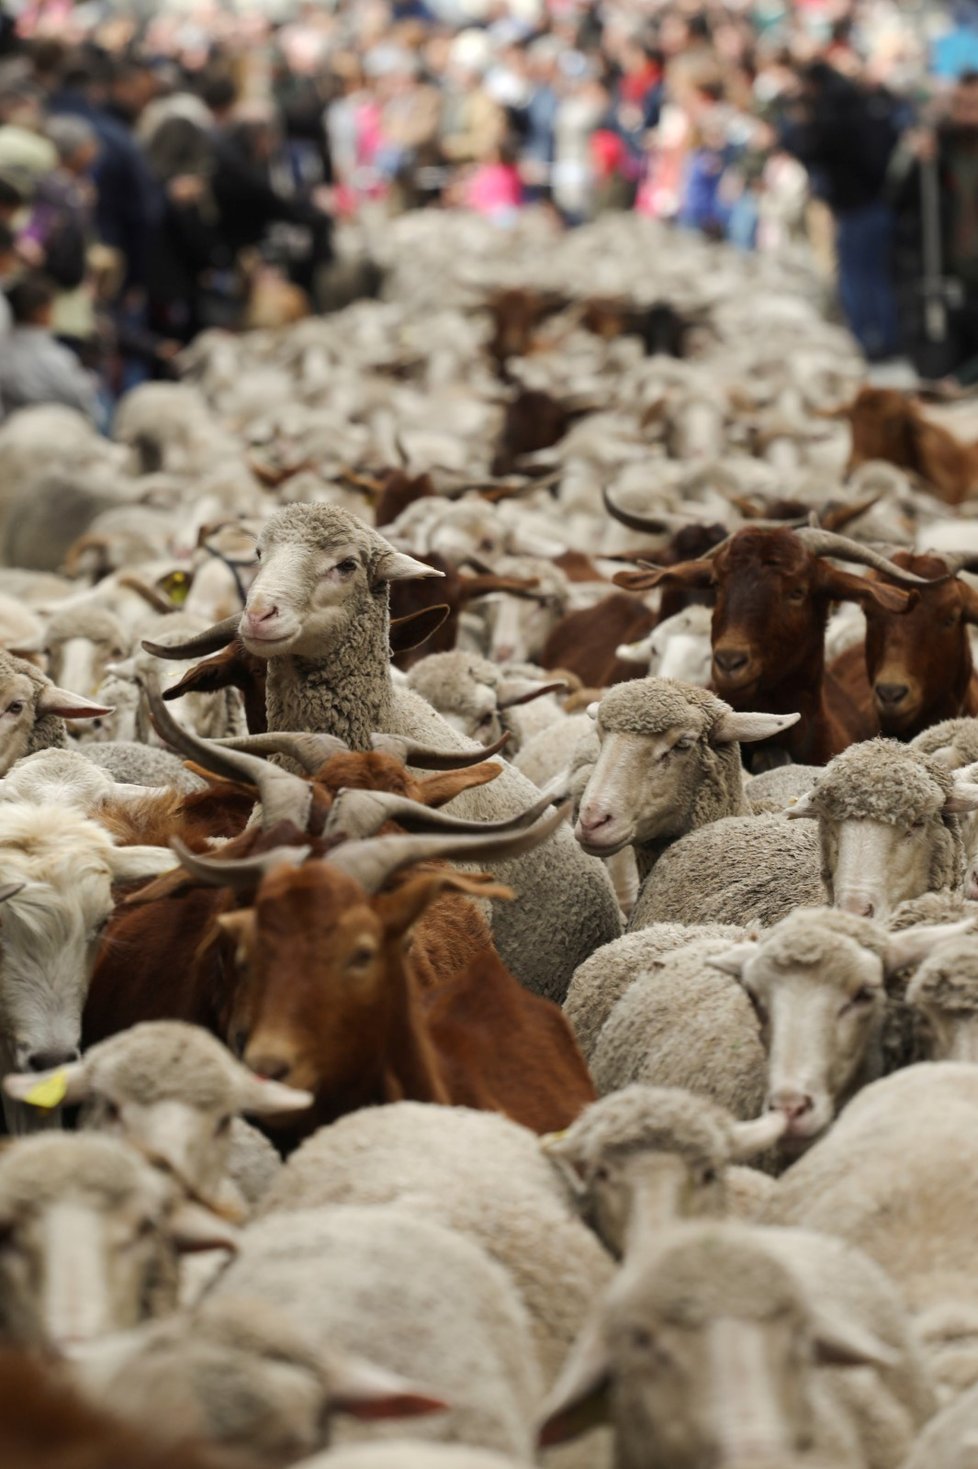 Ulice Madridu obsadily ovce a kozy (20. 10. 2019)